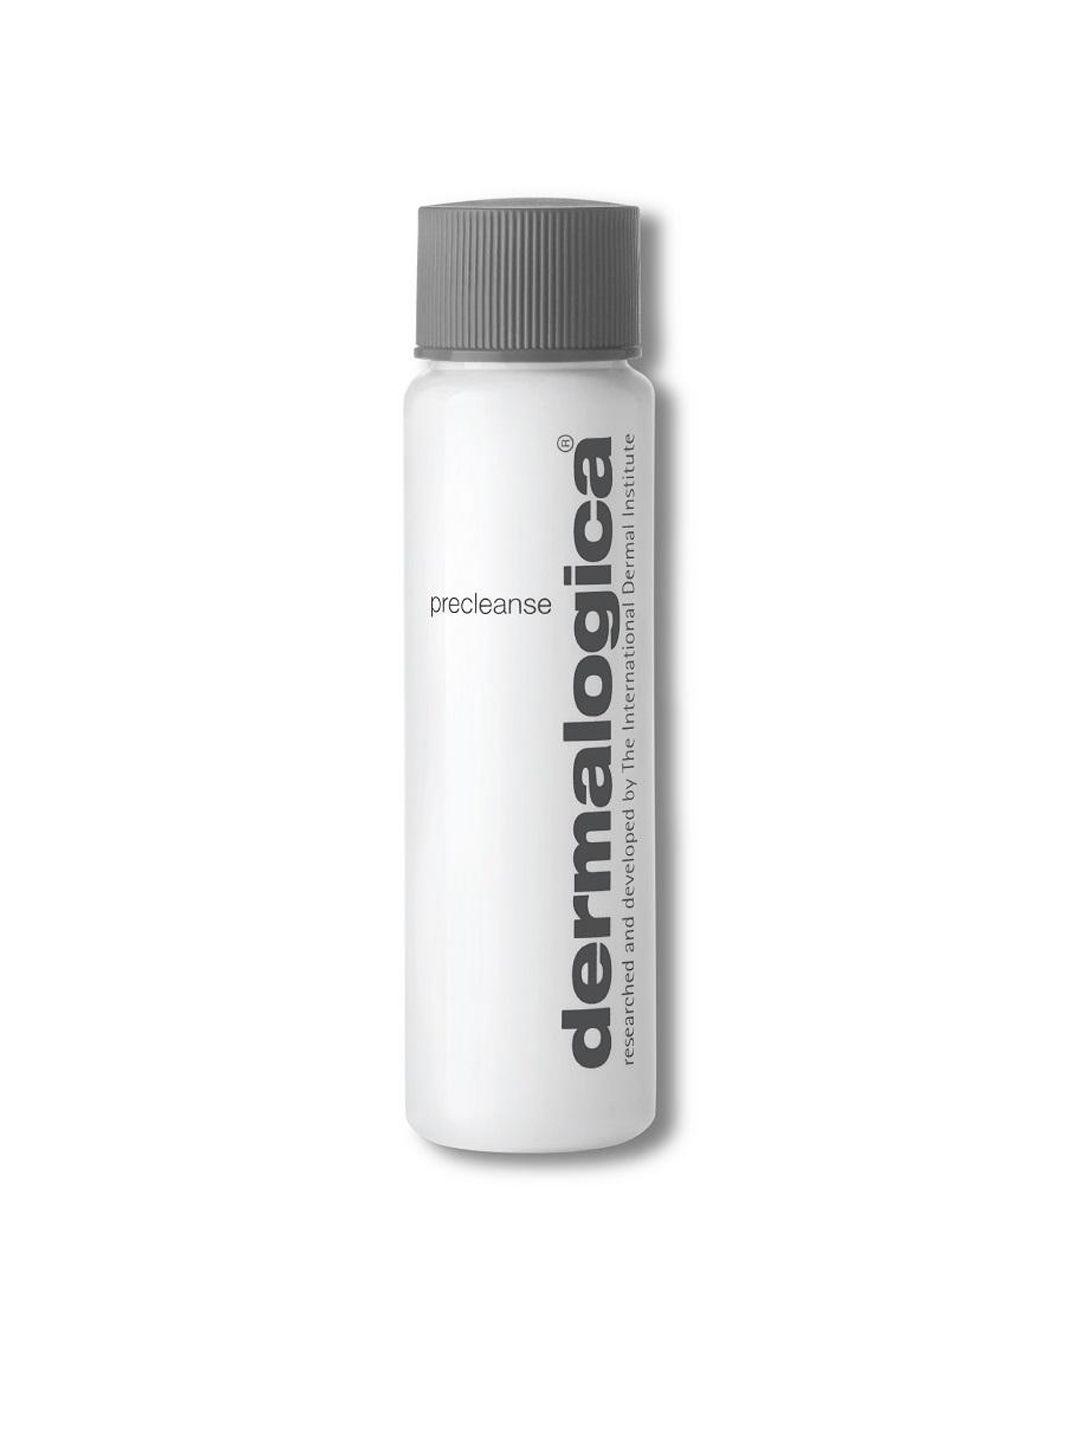 dermalogica-precleanse-deep-cleansing-oil-30-ml